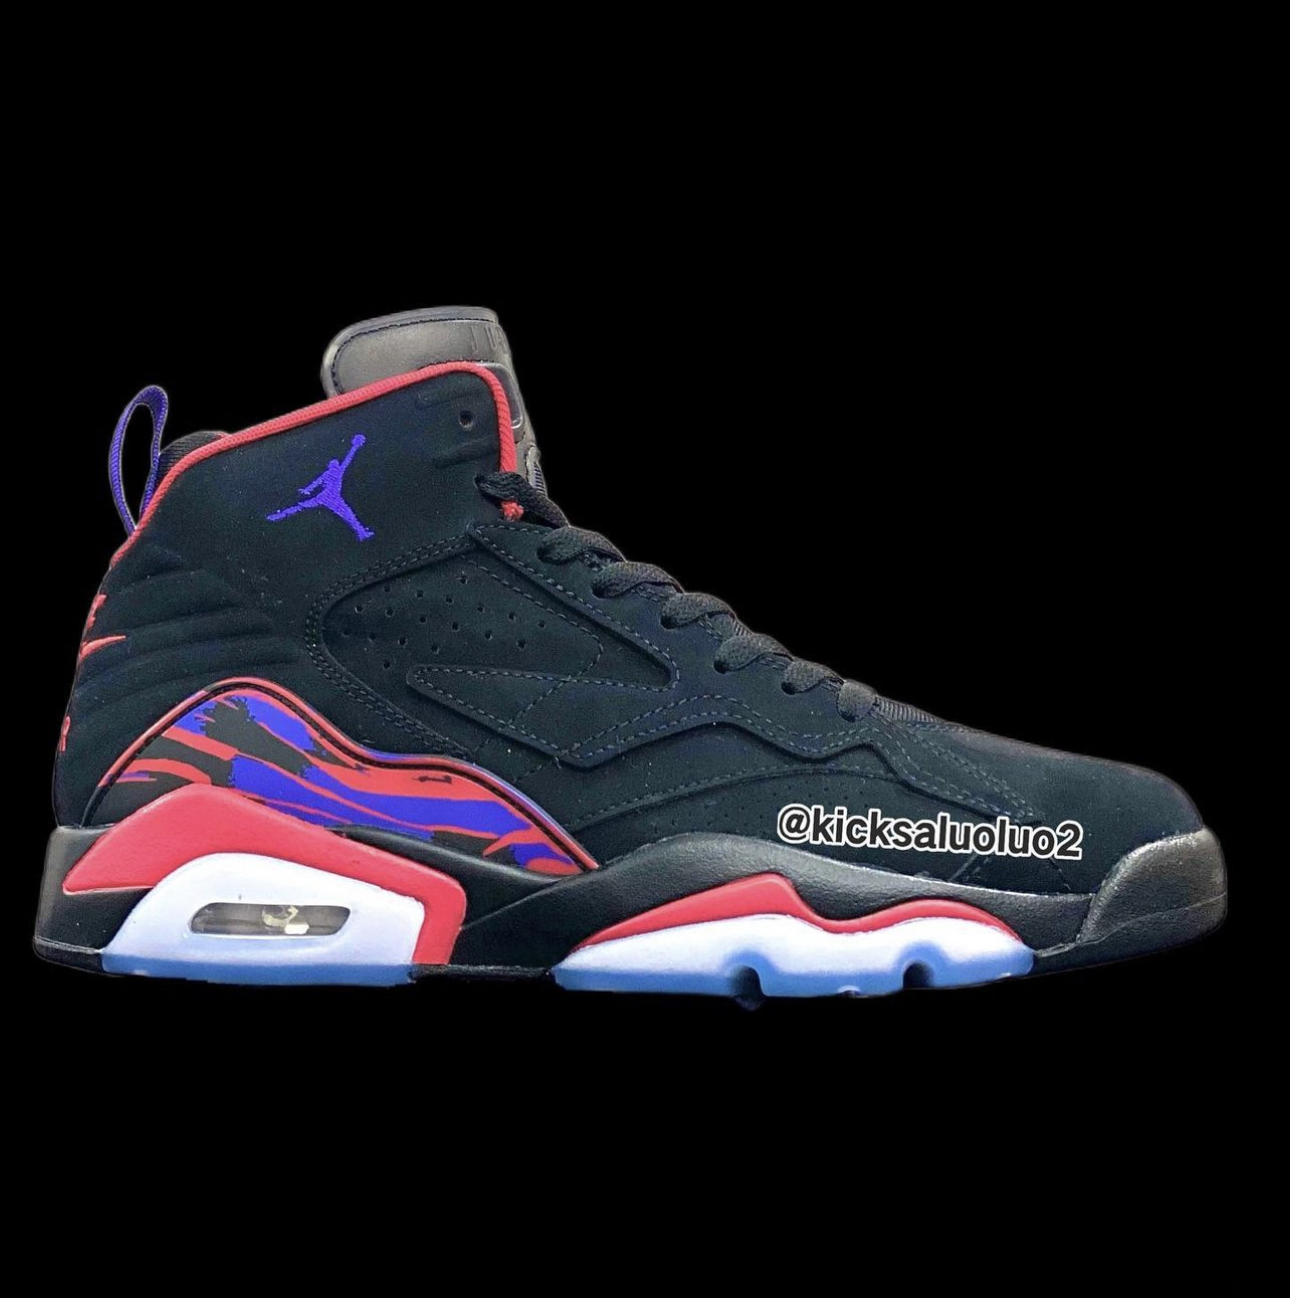 Jordan 678 MVP coming soon | Sneaker Shop Talk